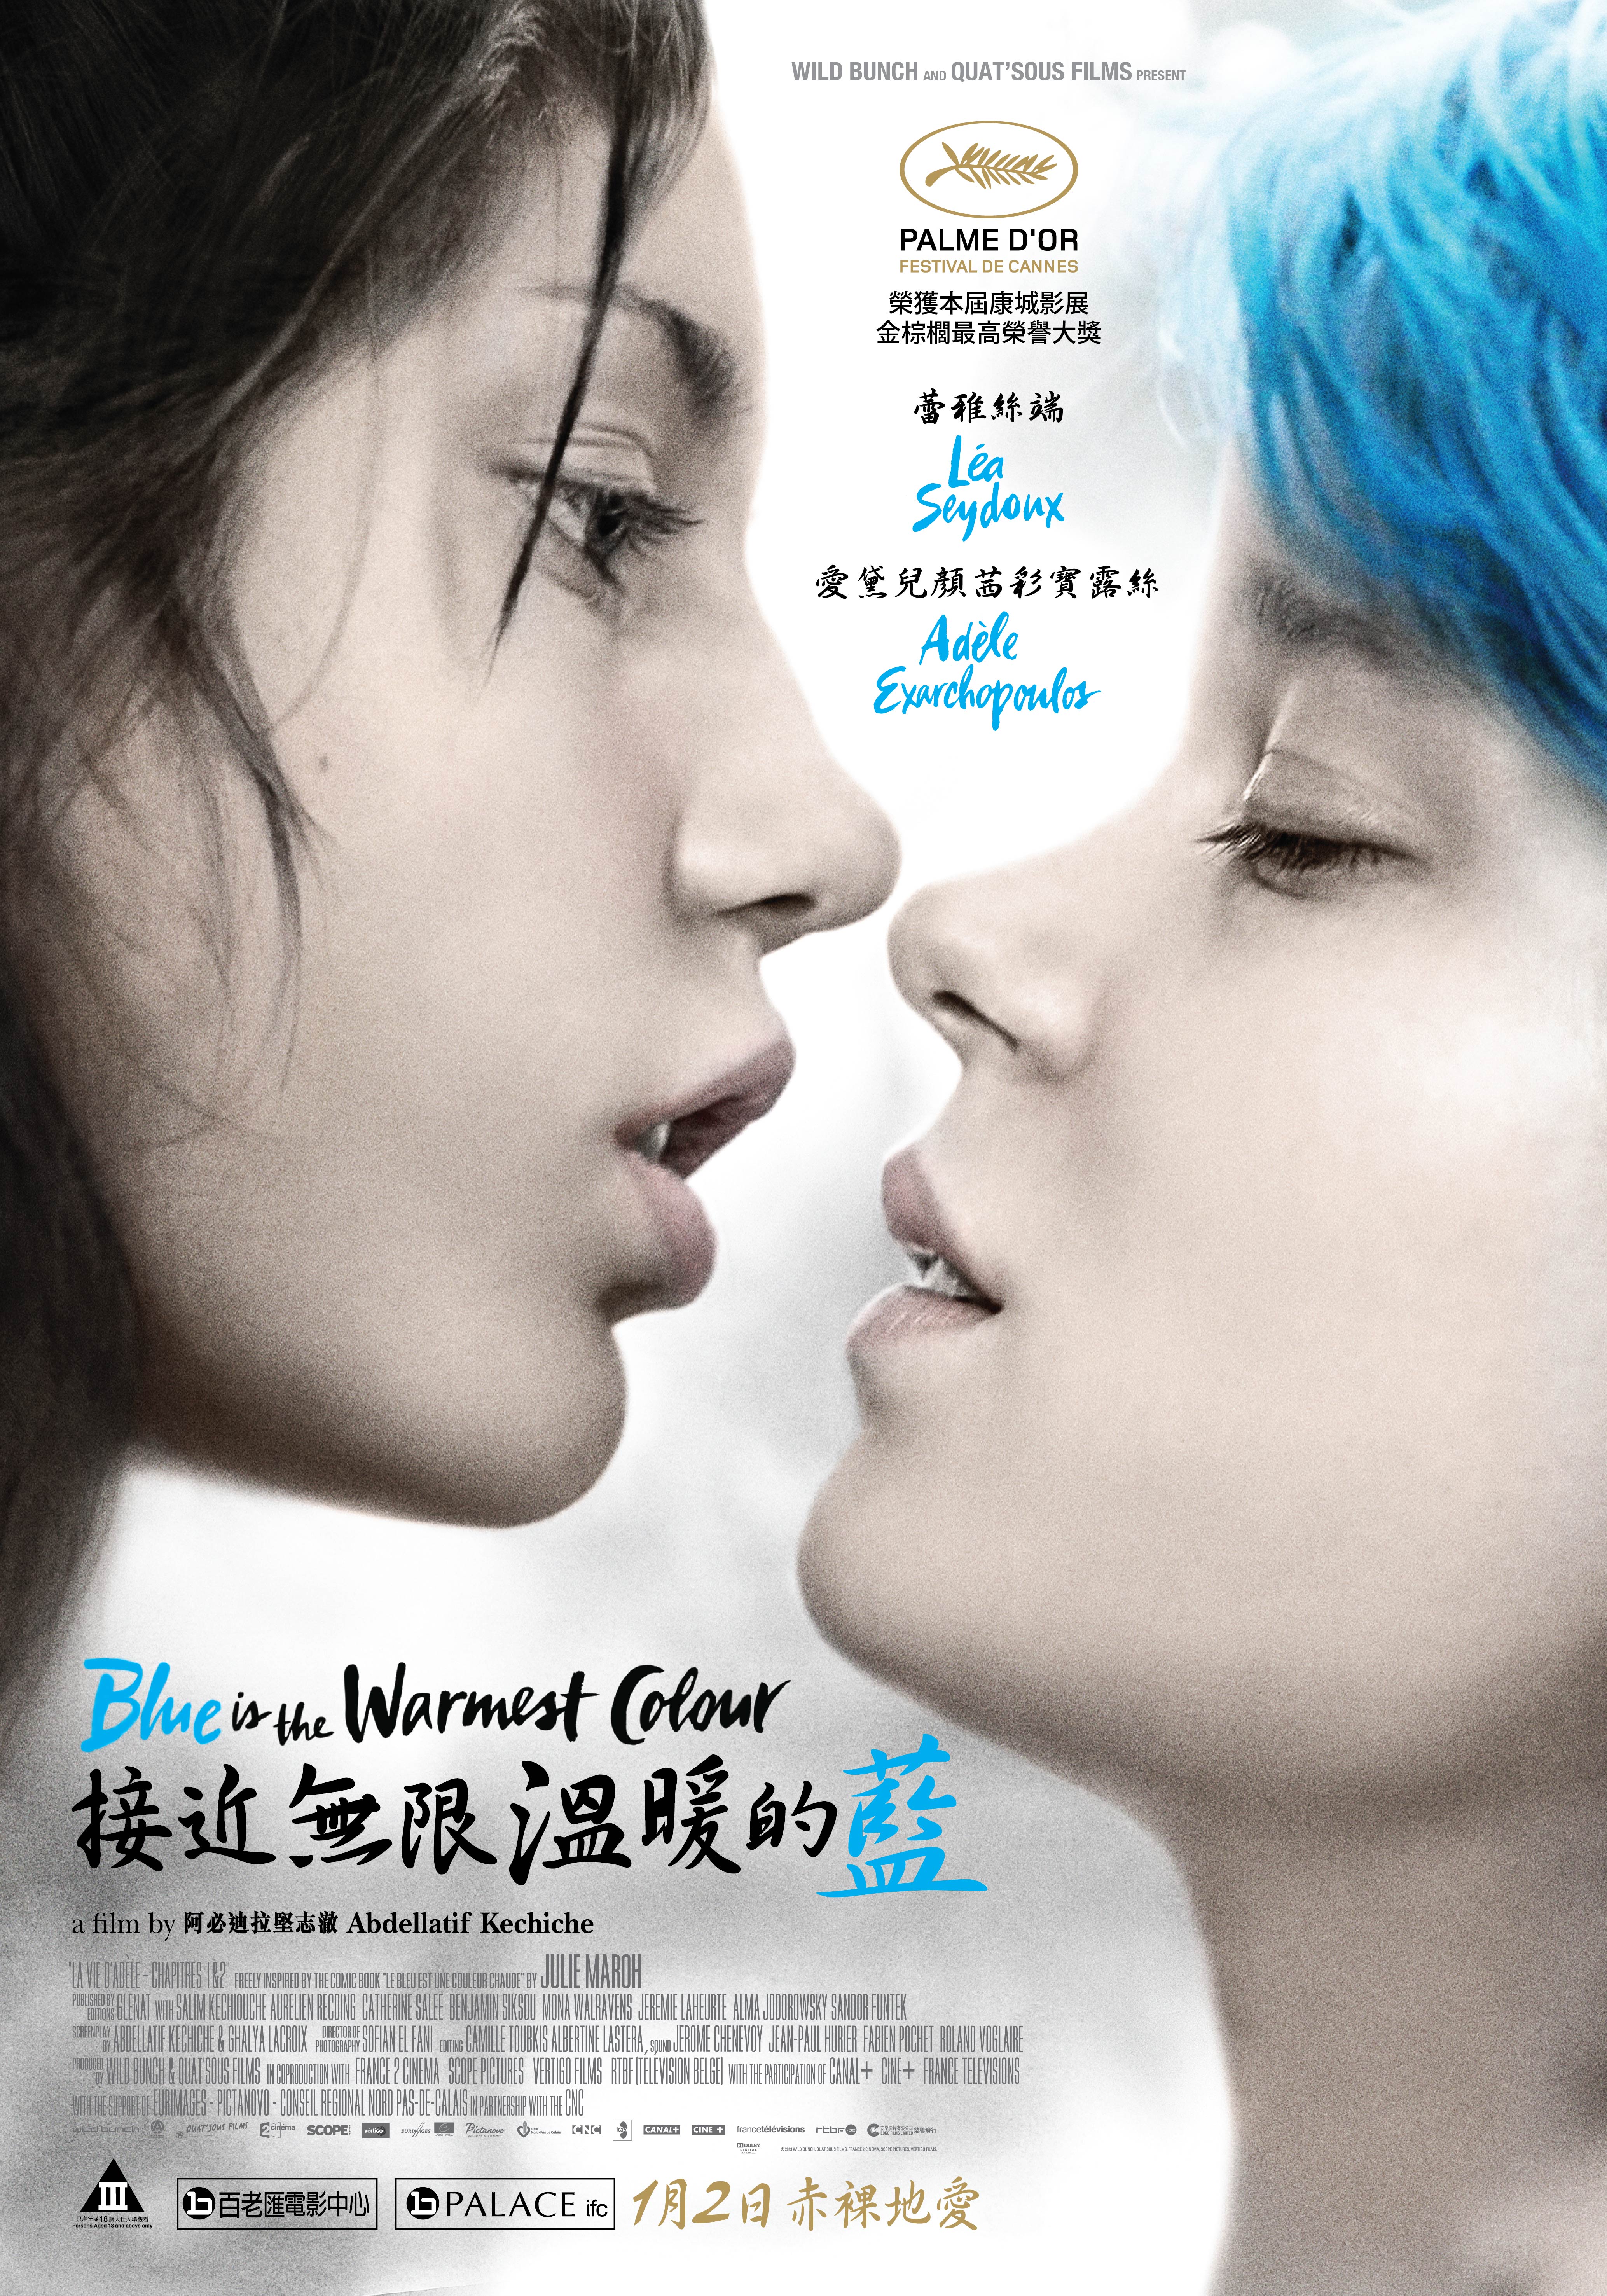 Review: Blue Is the Warmest Colour.